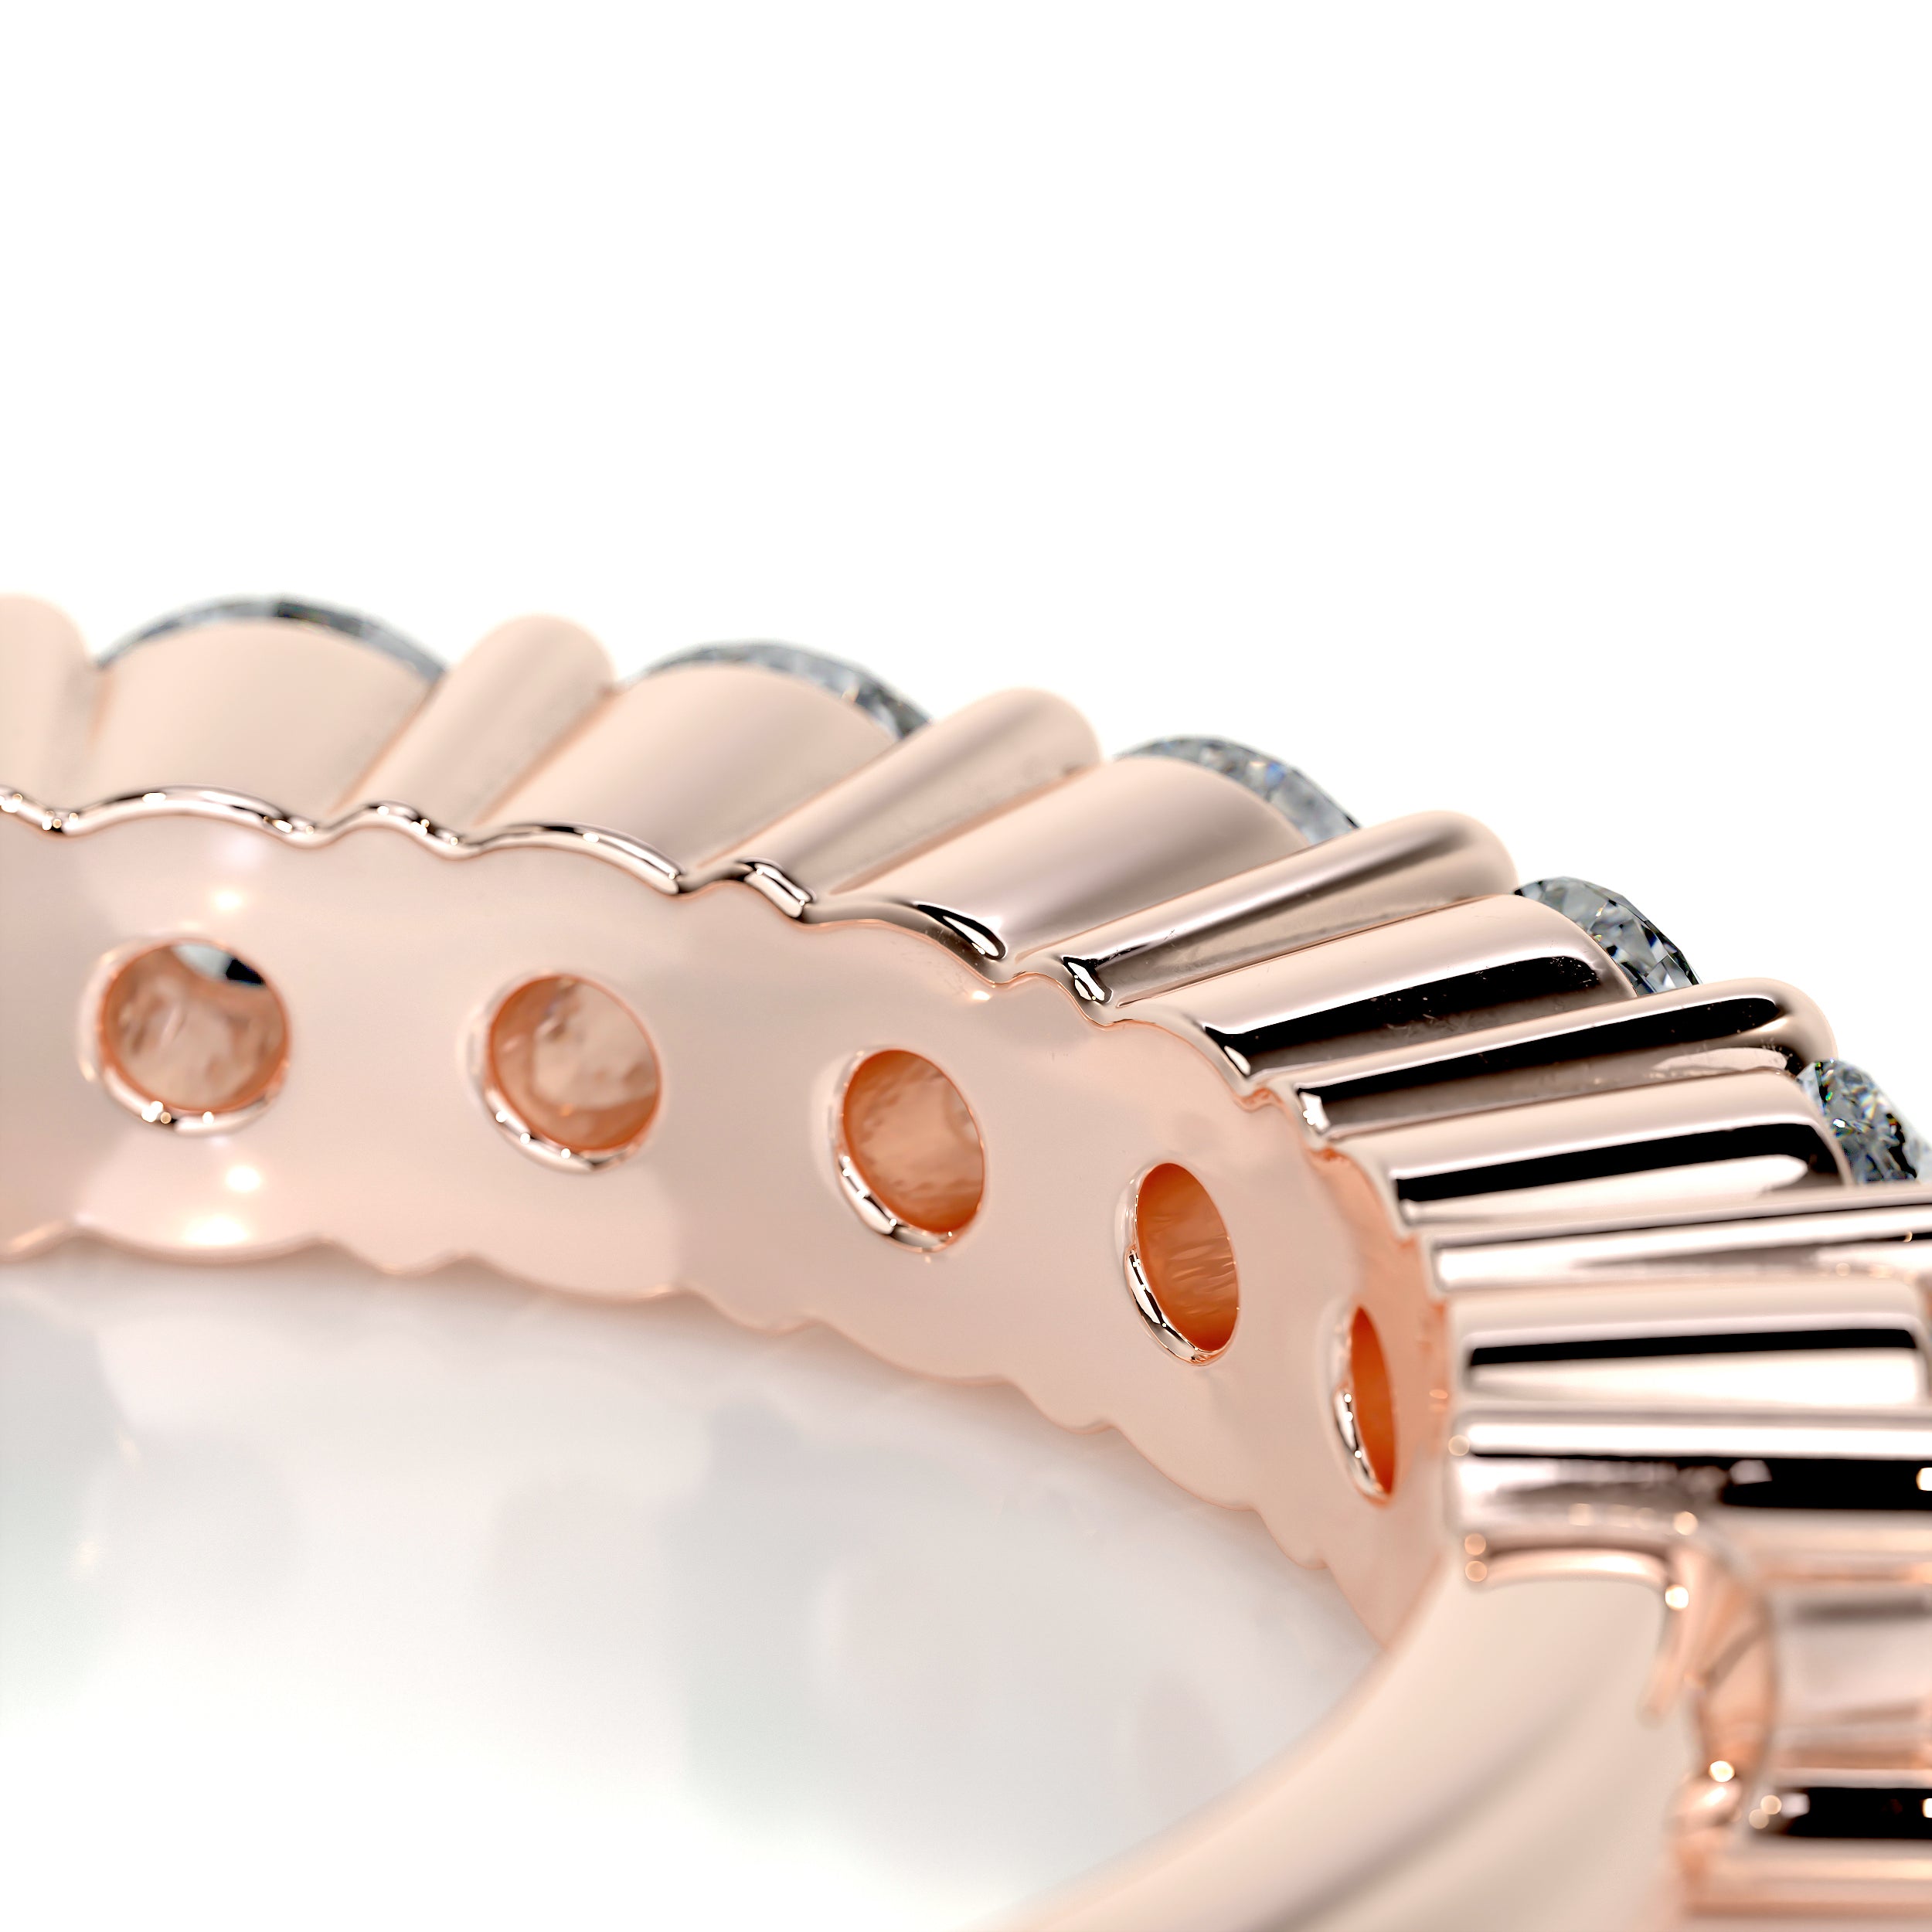 Catherine Diamond Wedding Ring   (0.75 Carat) -14K Rose Gold